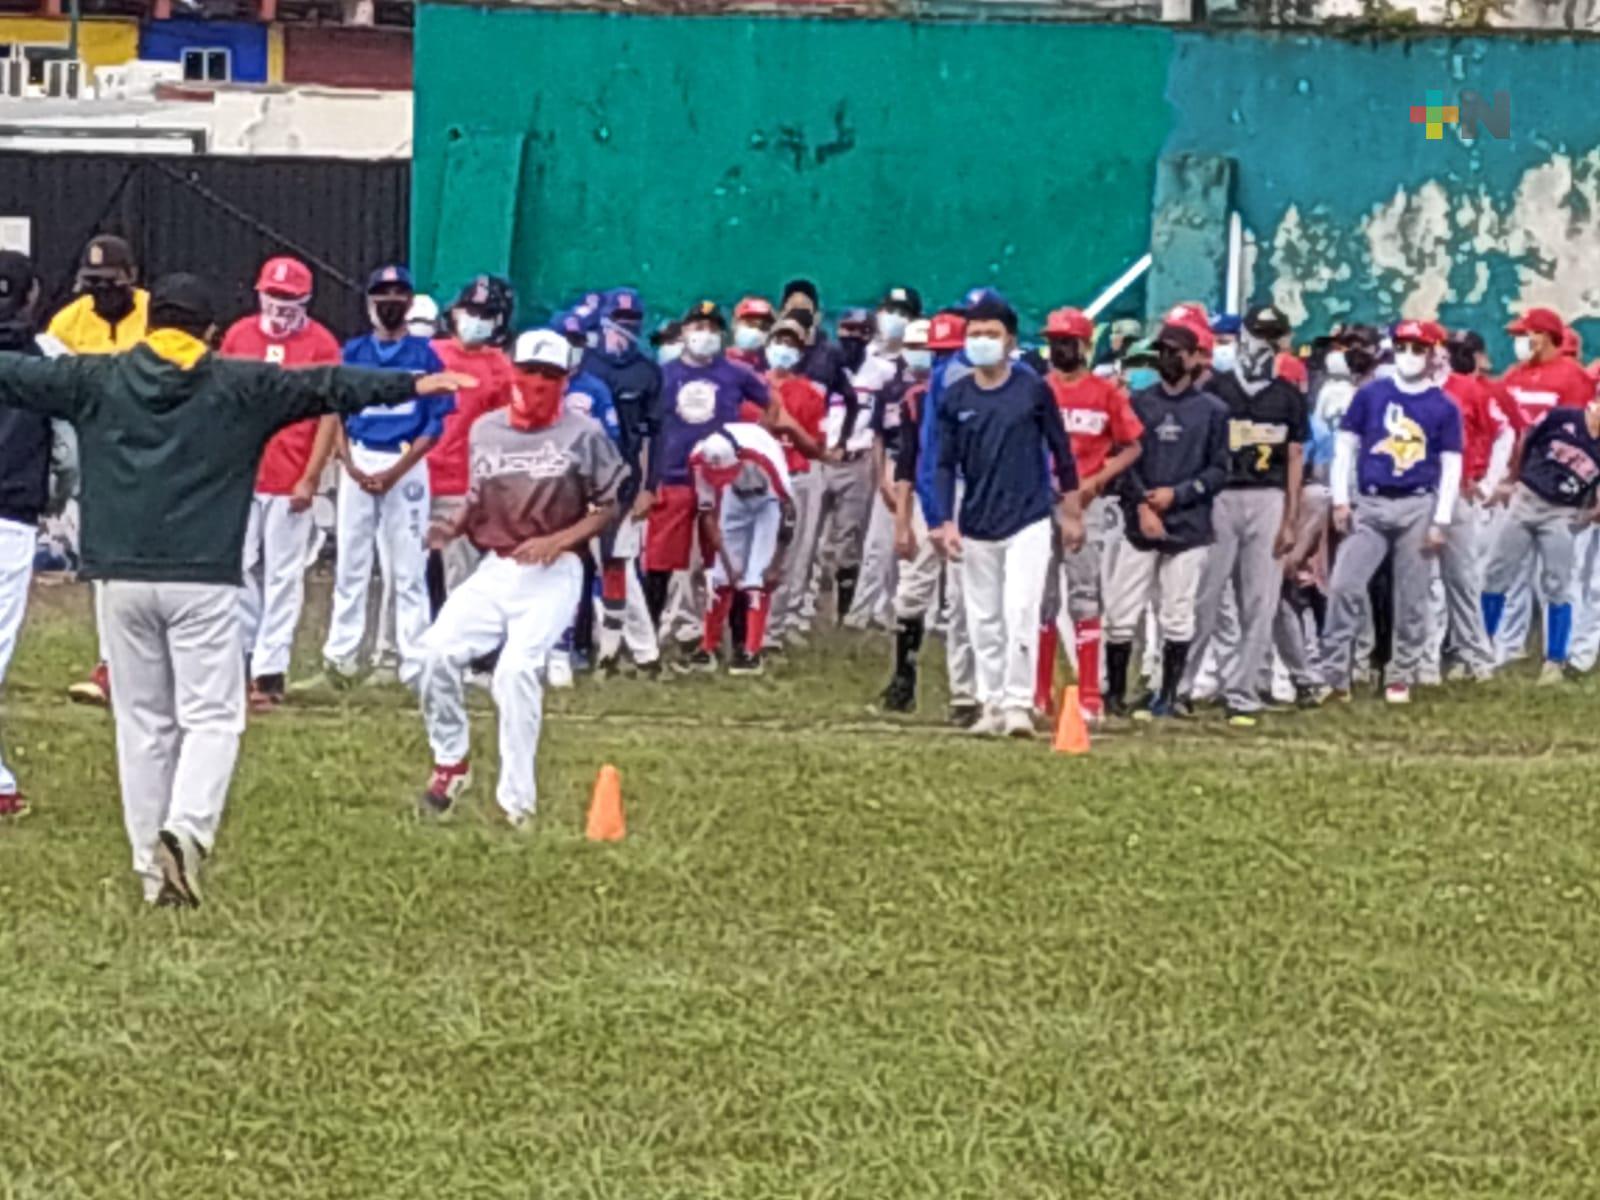 Anuncia intensa jornada la Liga Xalapeña de Beisbol infantil y juvenil